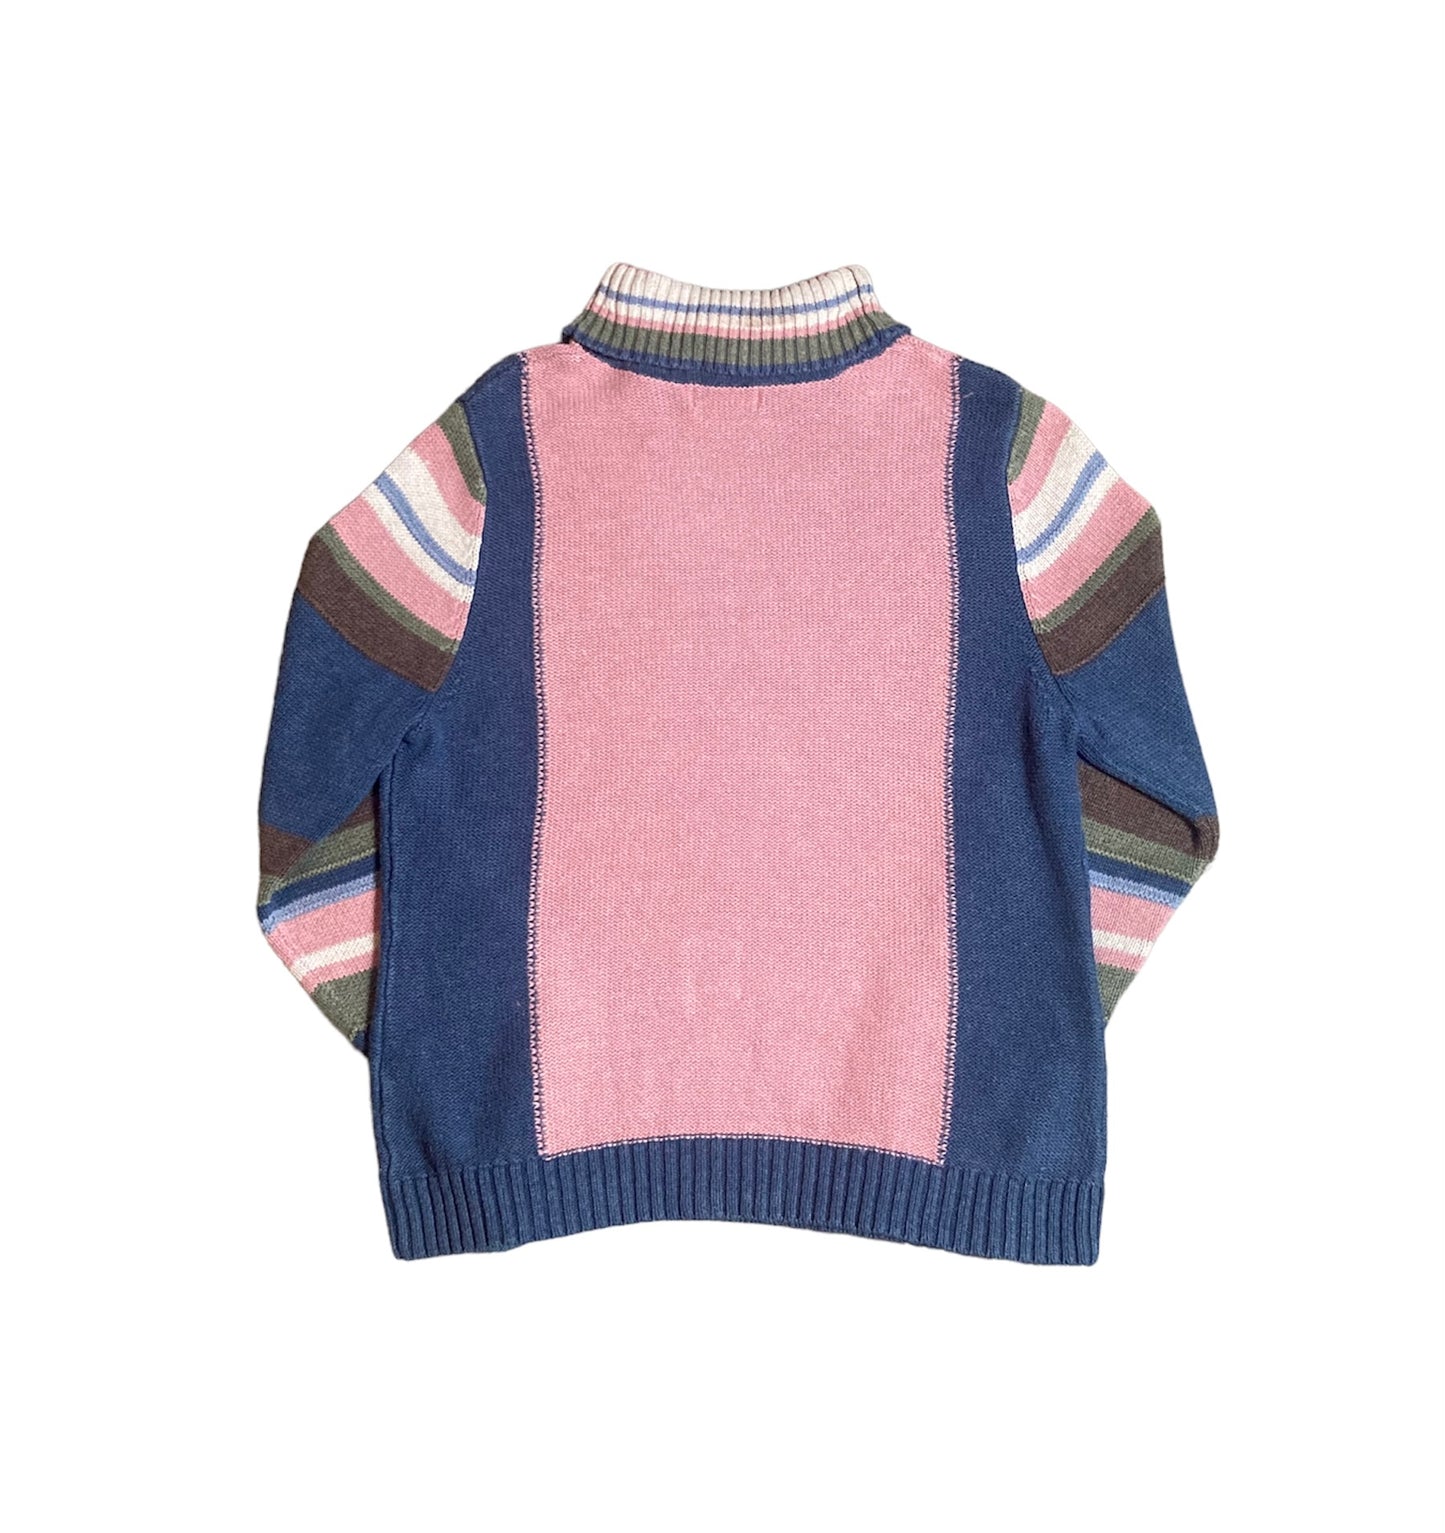 Vintage Christopher and Banks Turtleneck Sweater